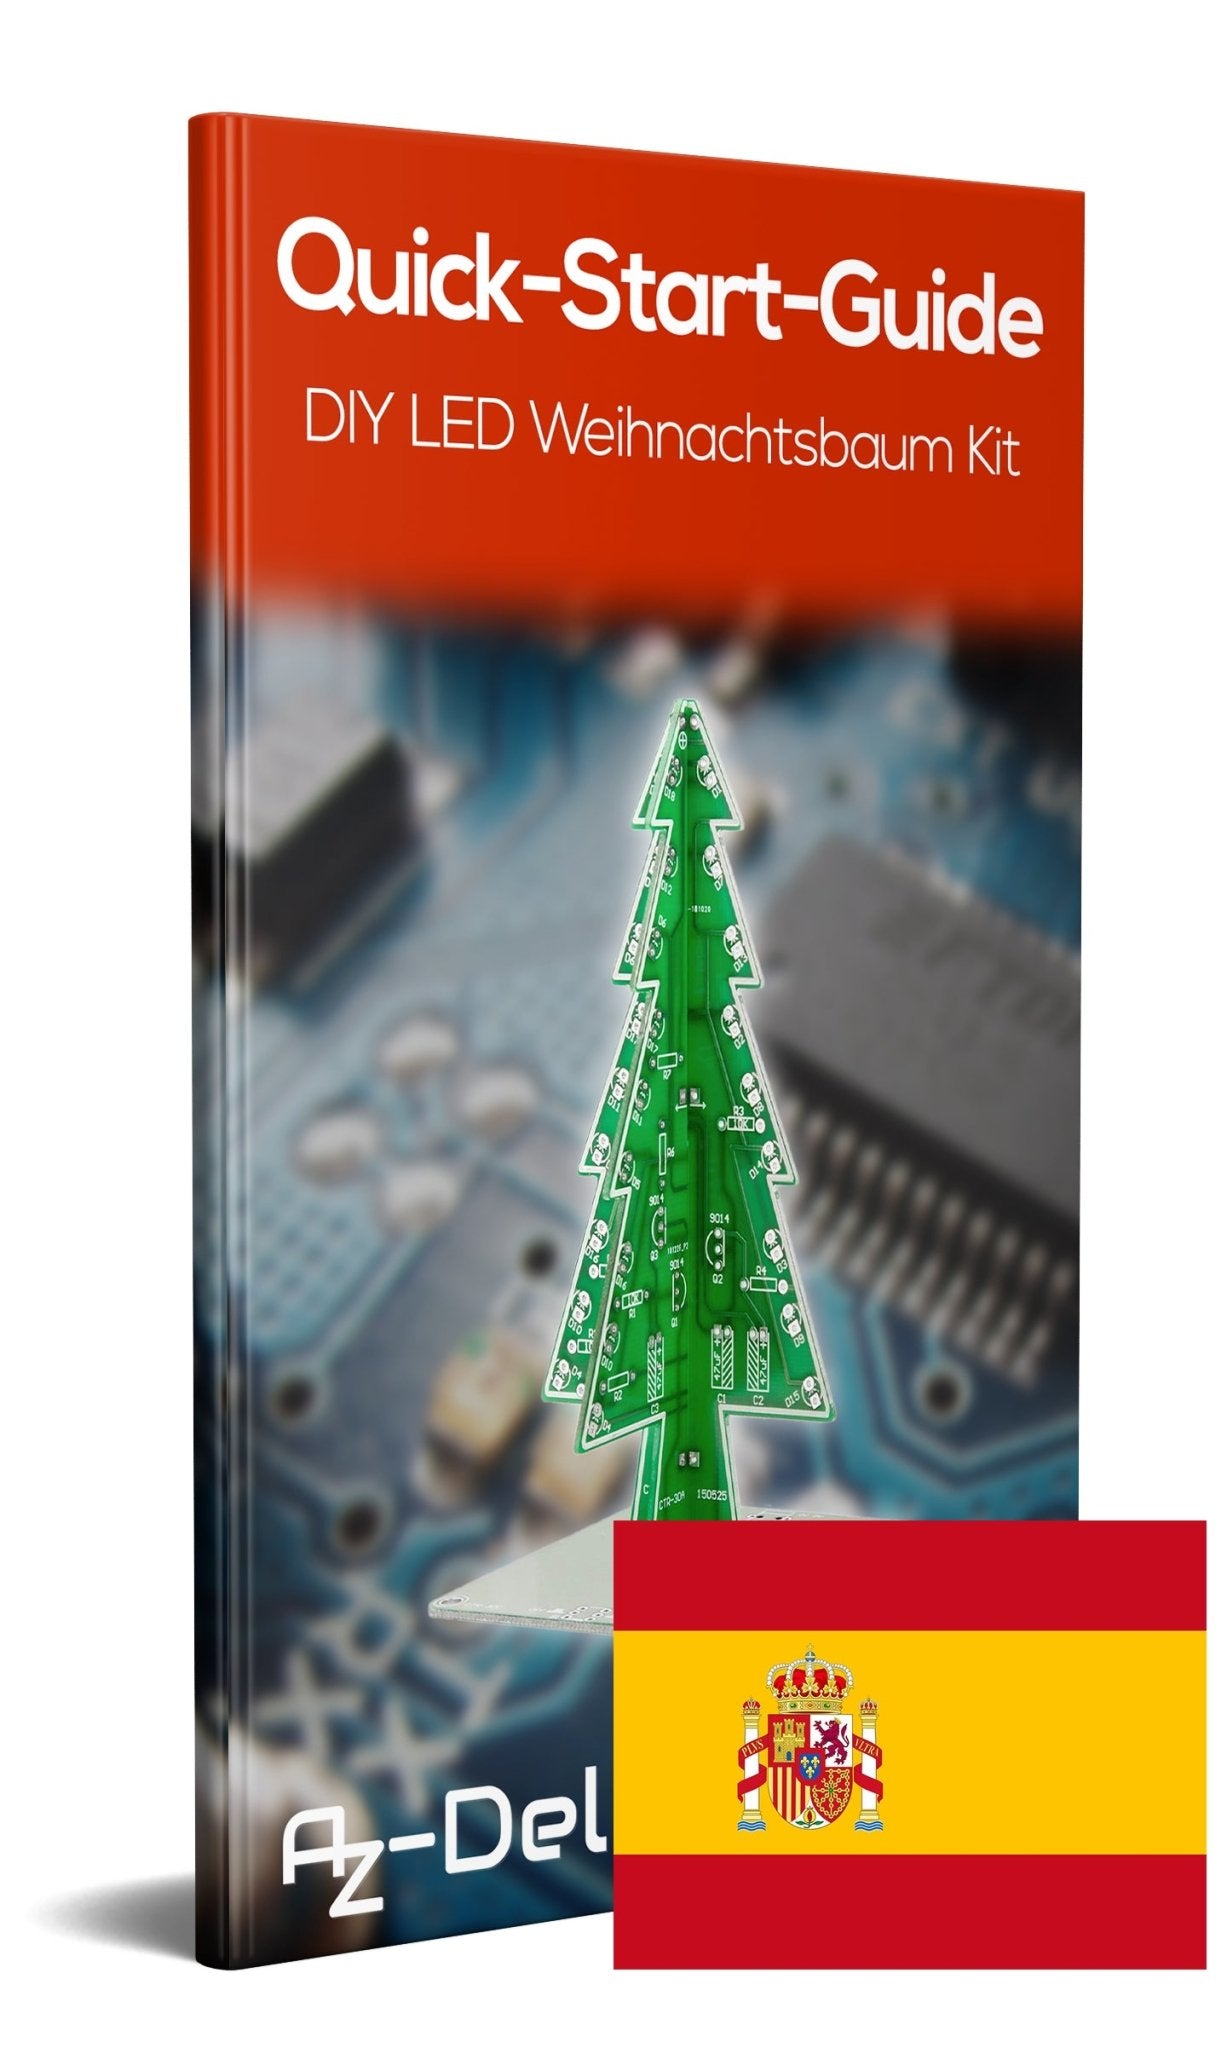 DIY LED Weihnachtsbaum Kit - AZ-Delivery